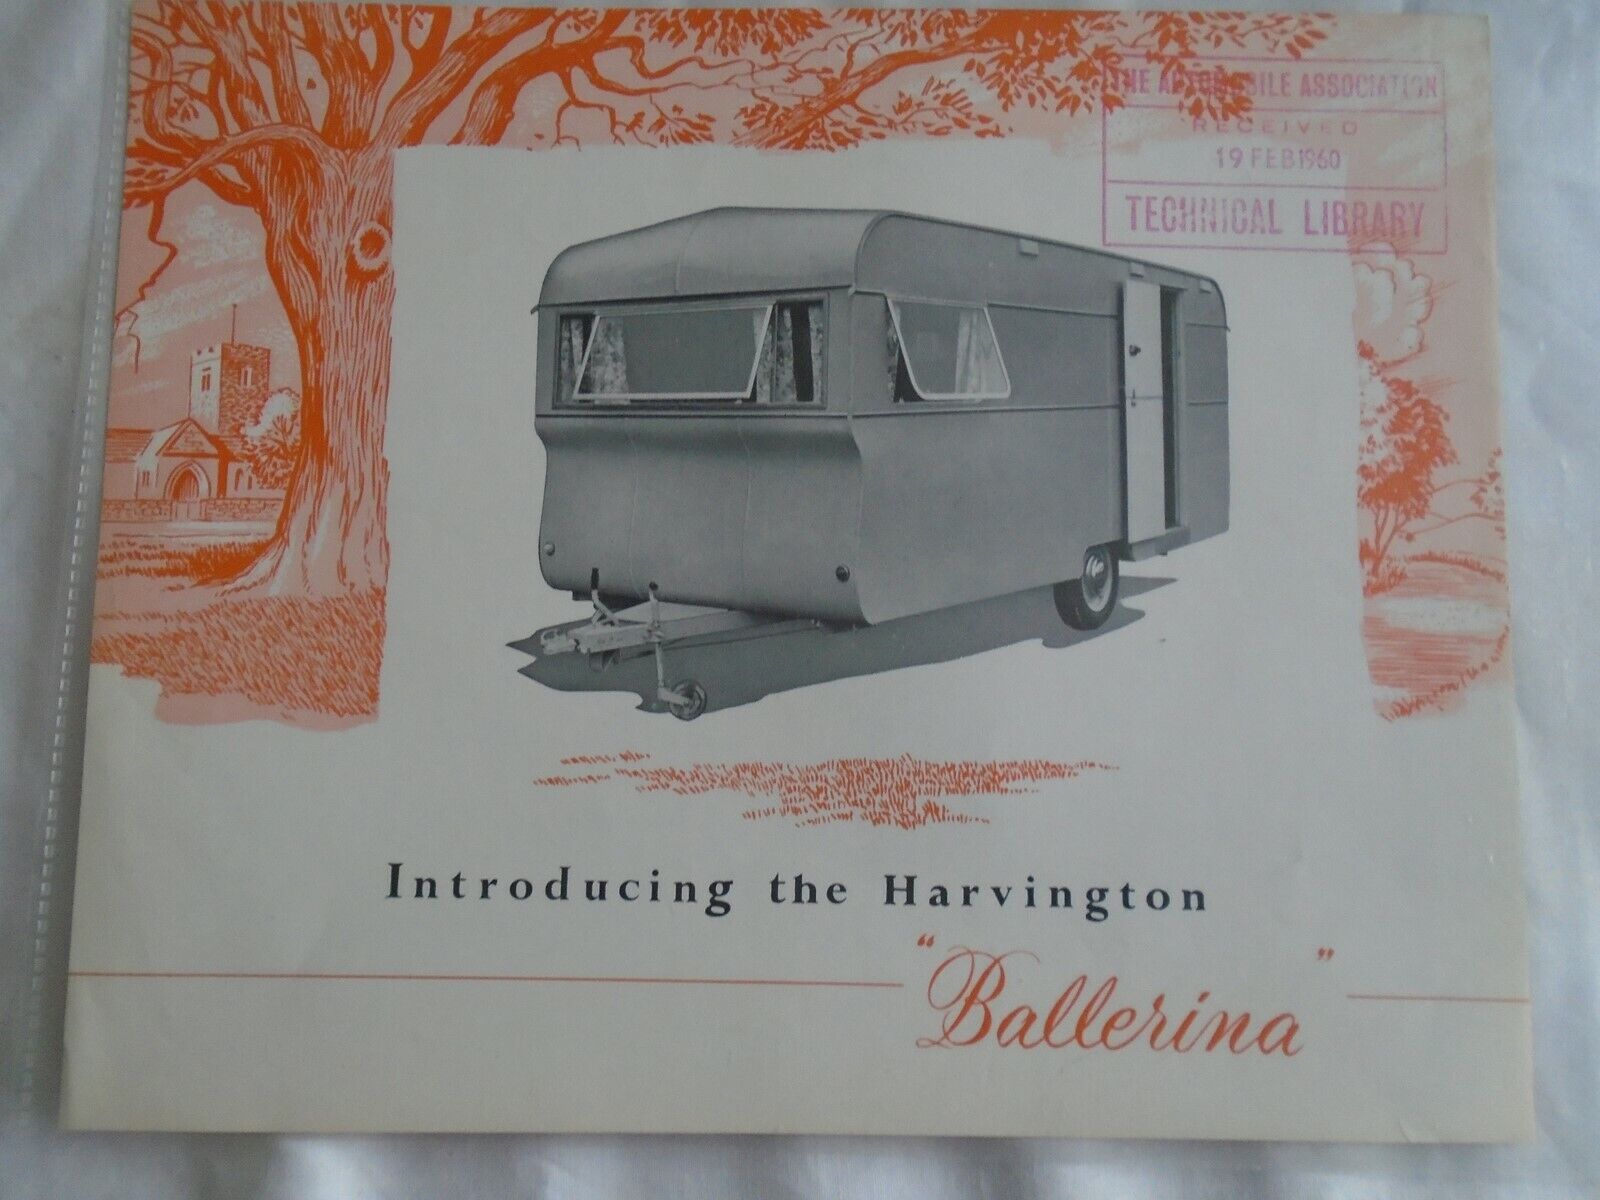 Harvington Ballerina Caravan brochure 1960